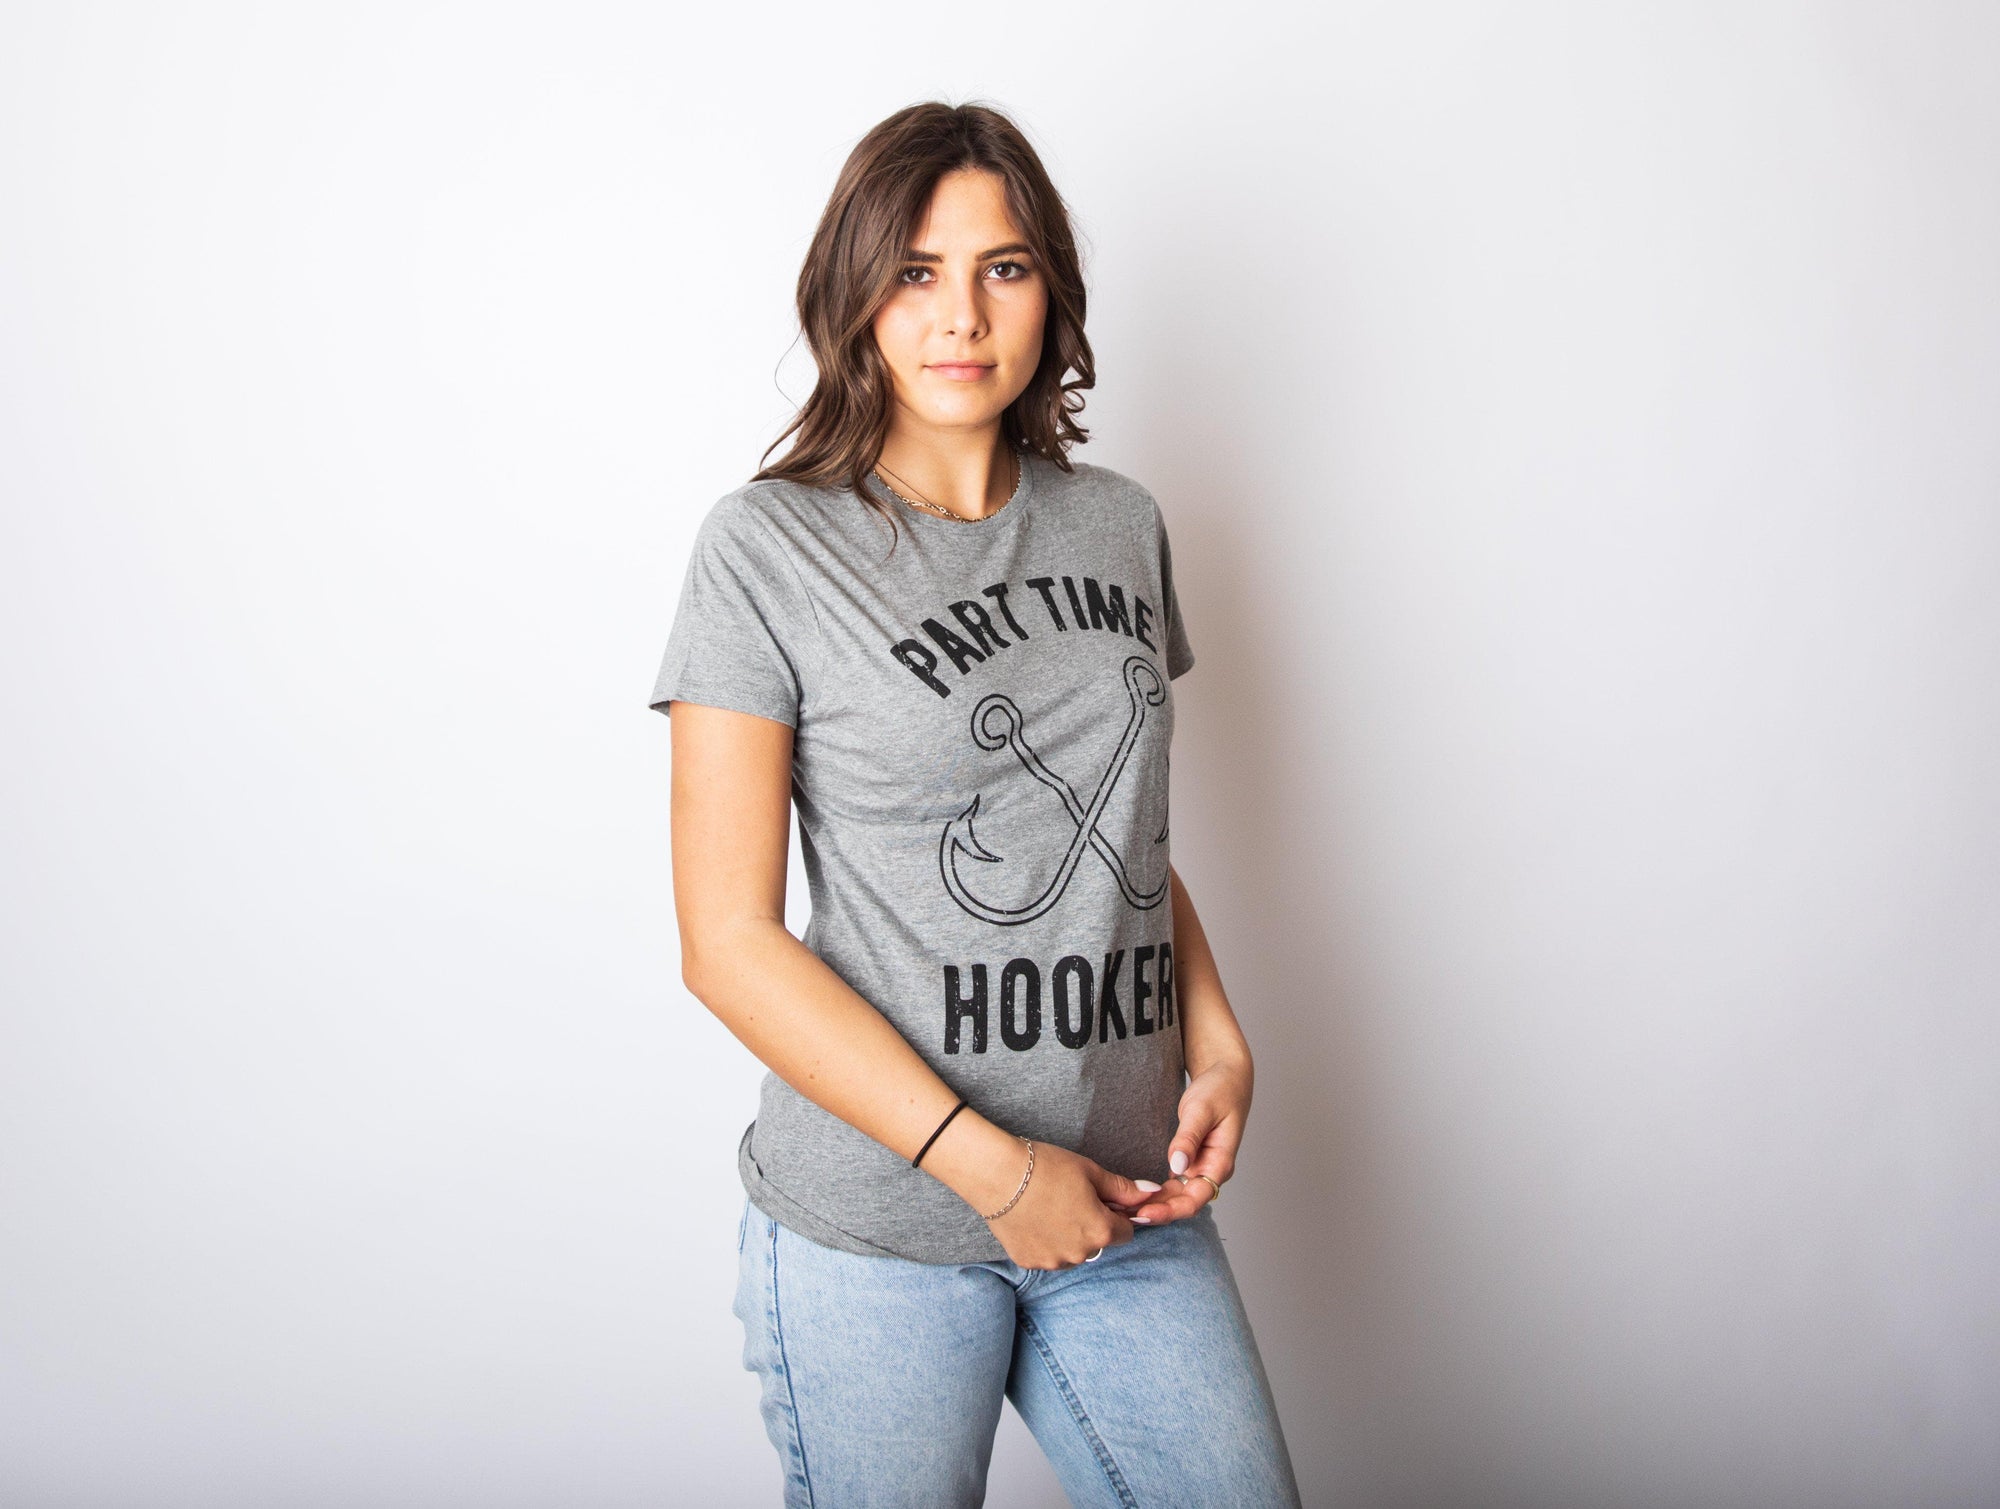 Part Time Hooker Women's Tshirt  -  Crazy Dog T-Shirts